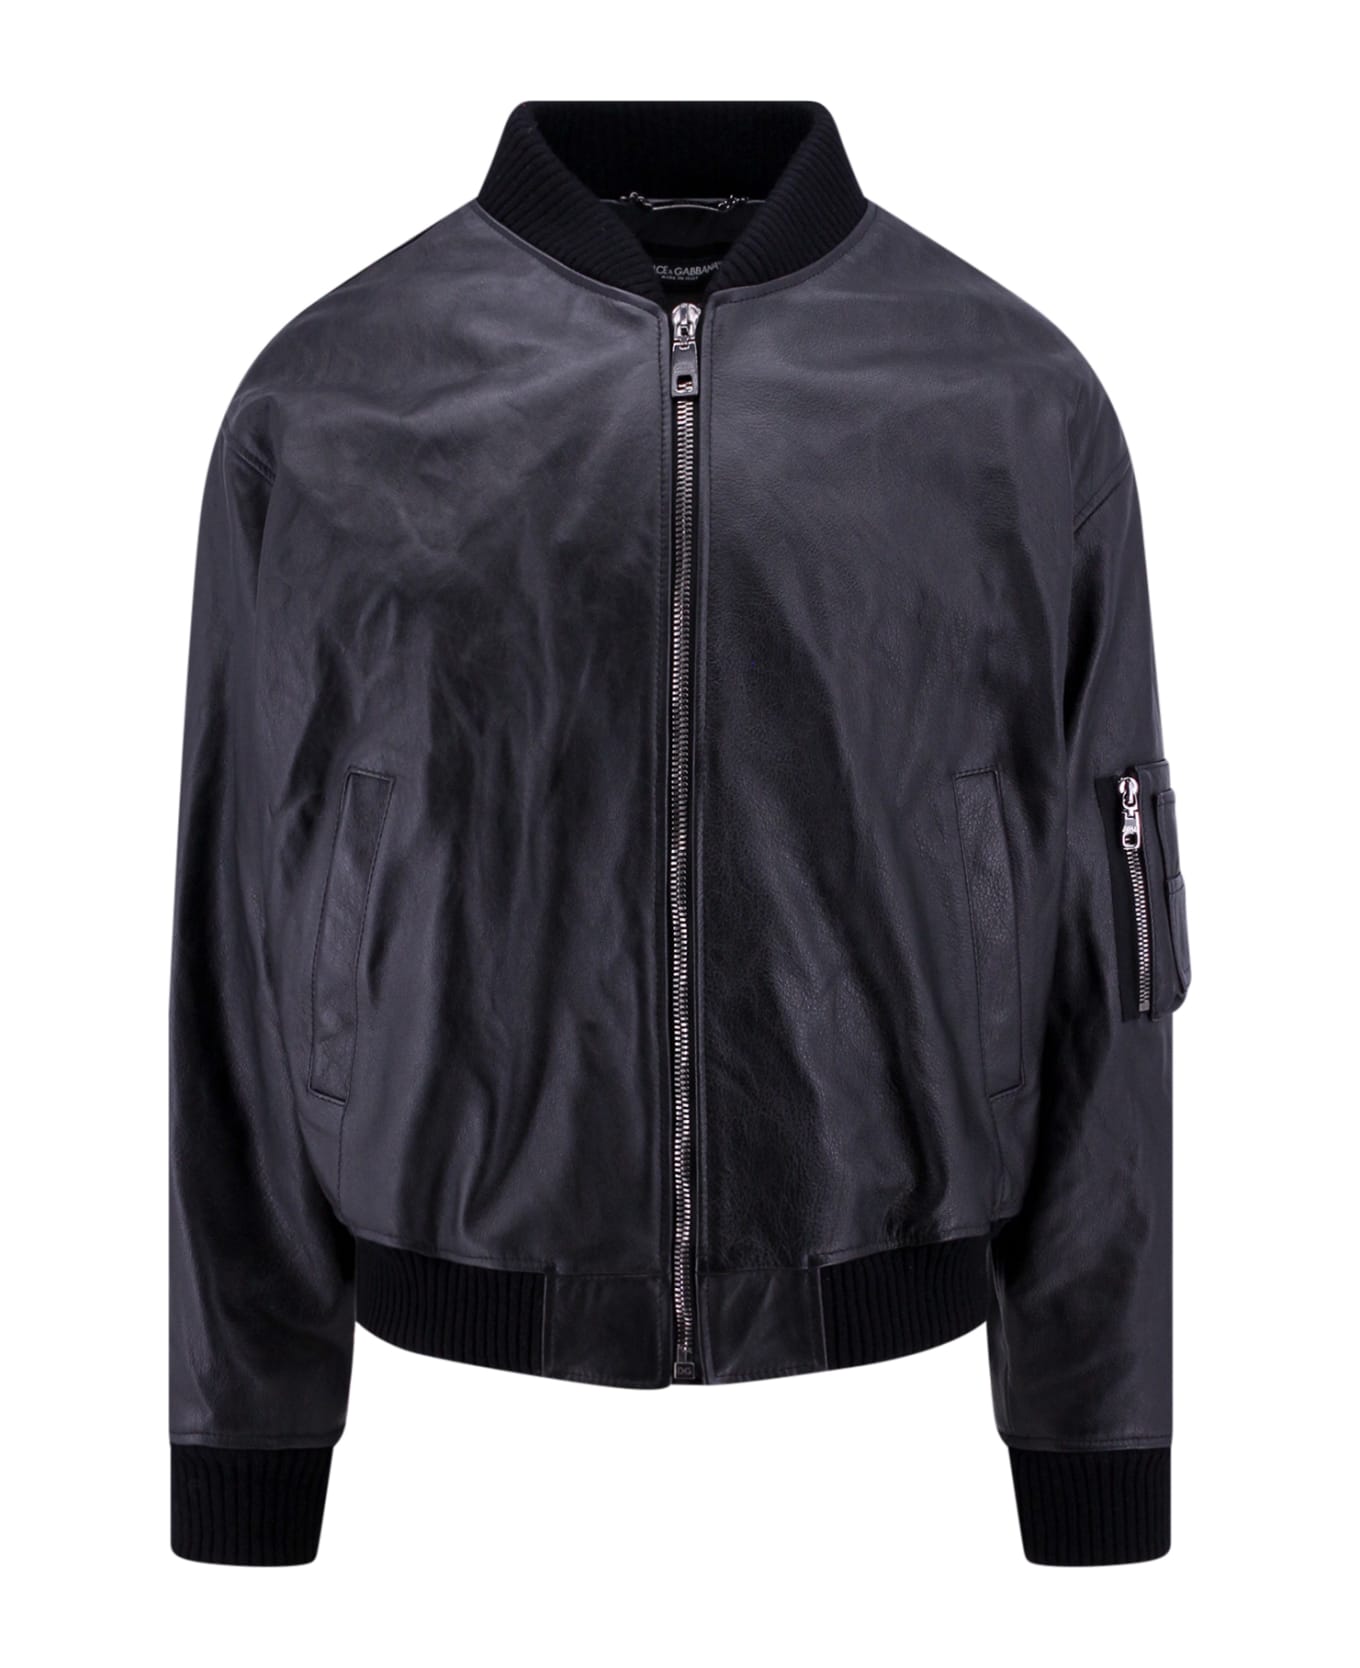 Dolce & Gabbana Leather Jacket - black